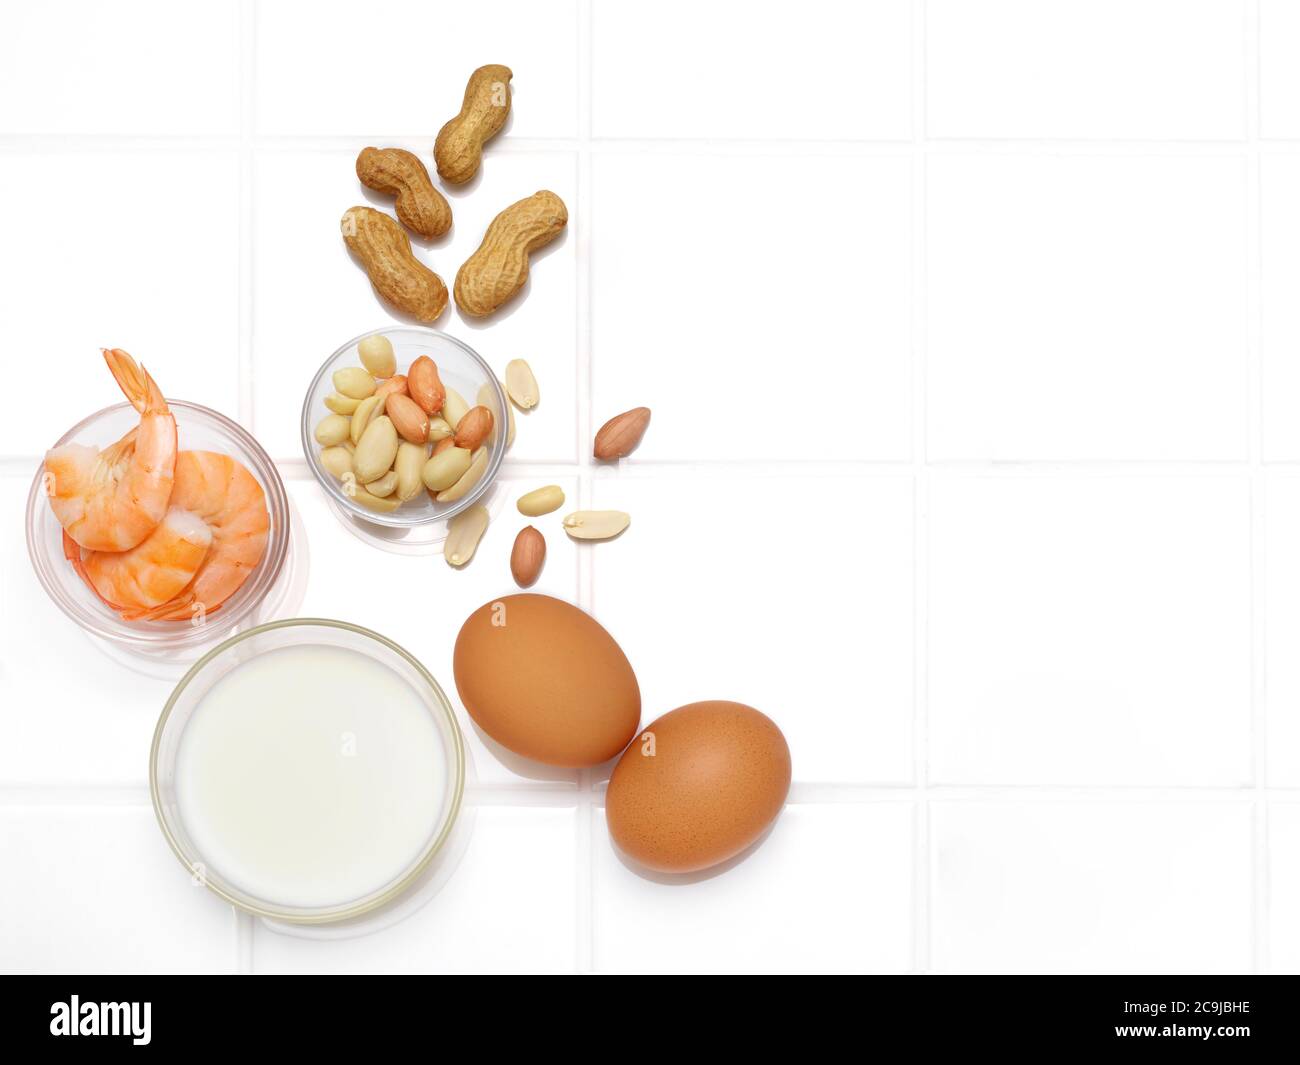 Foods associated with allergies, studio shot. Stock Photo